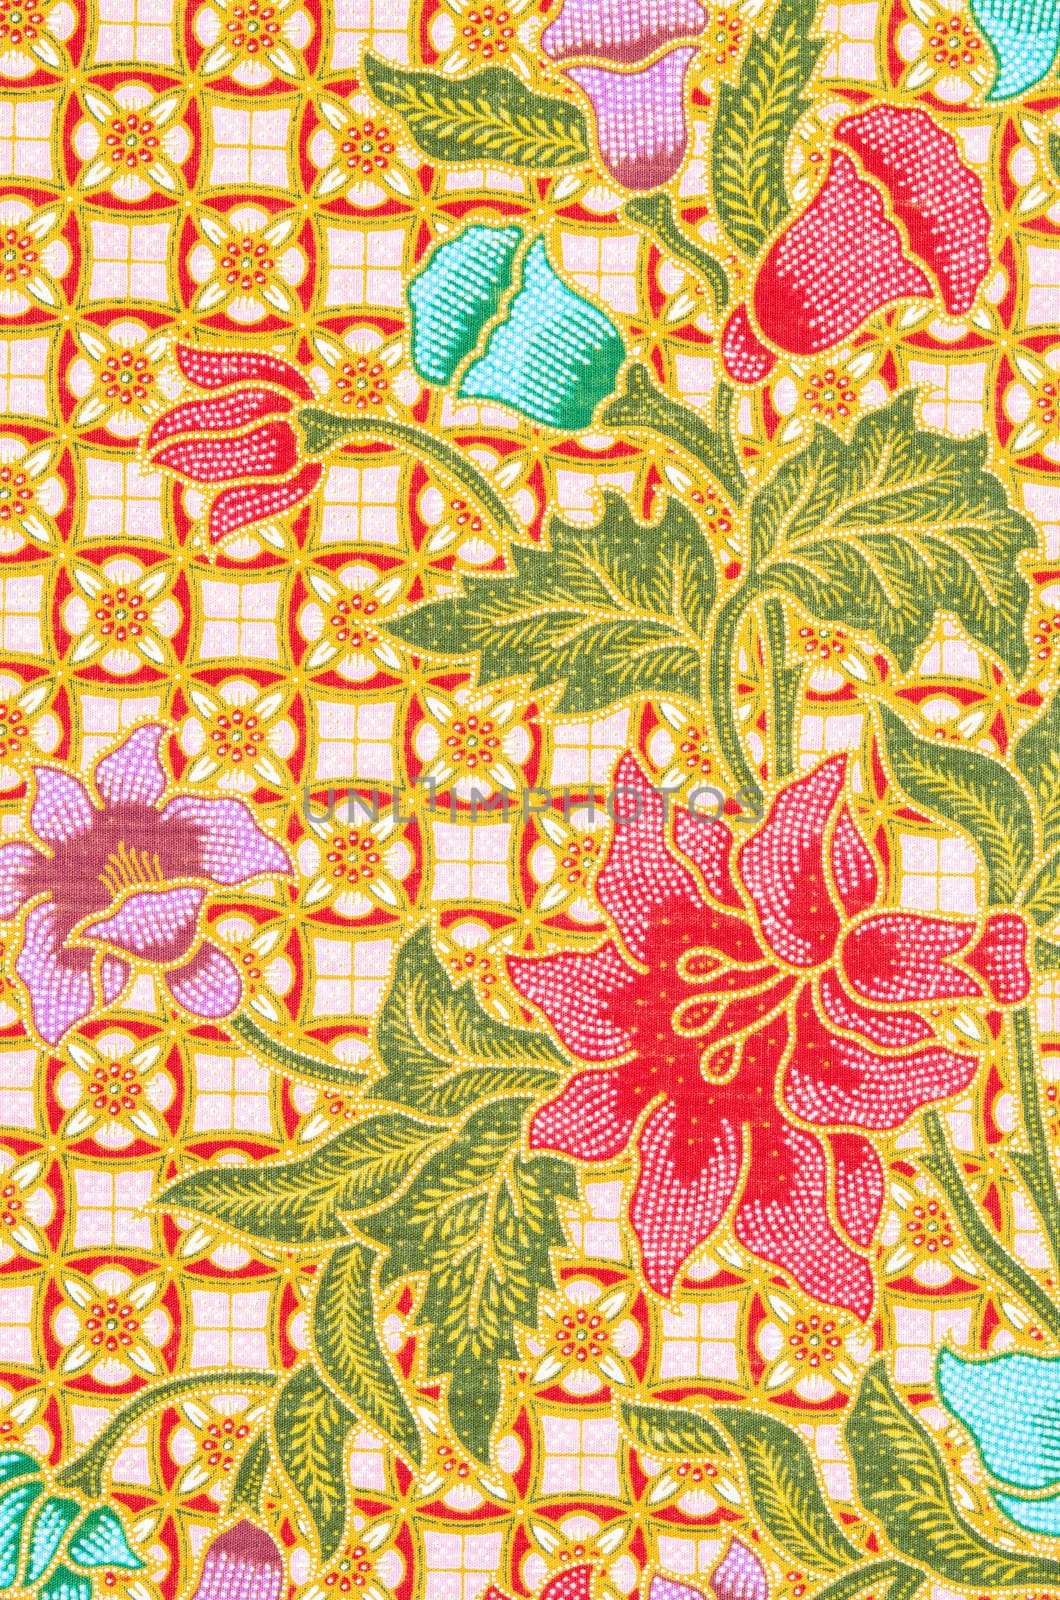 Abstract bright textile in batik's technique